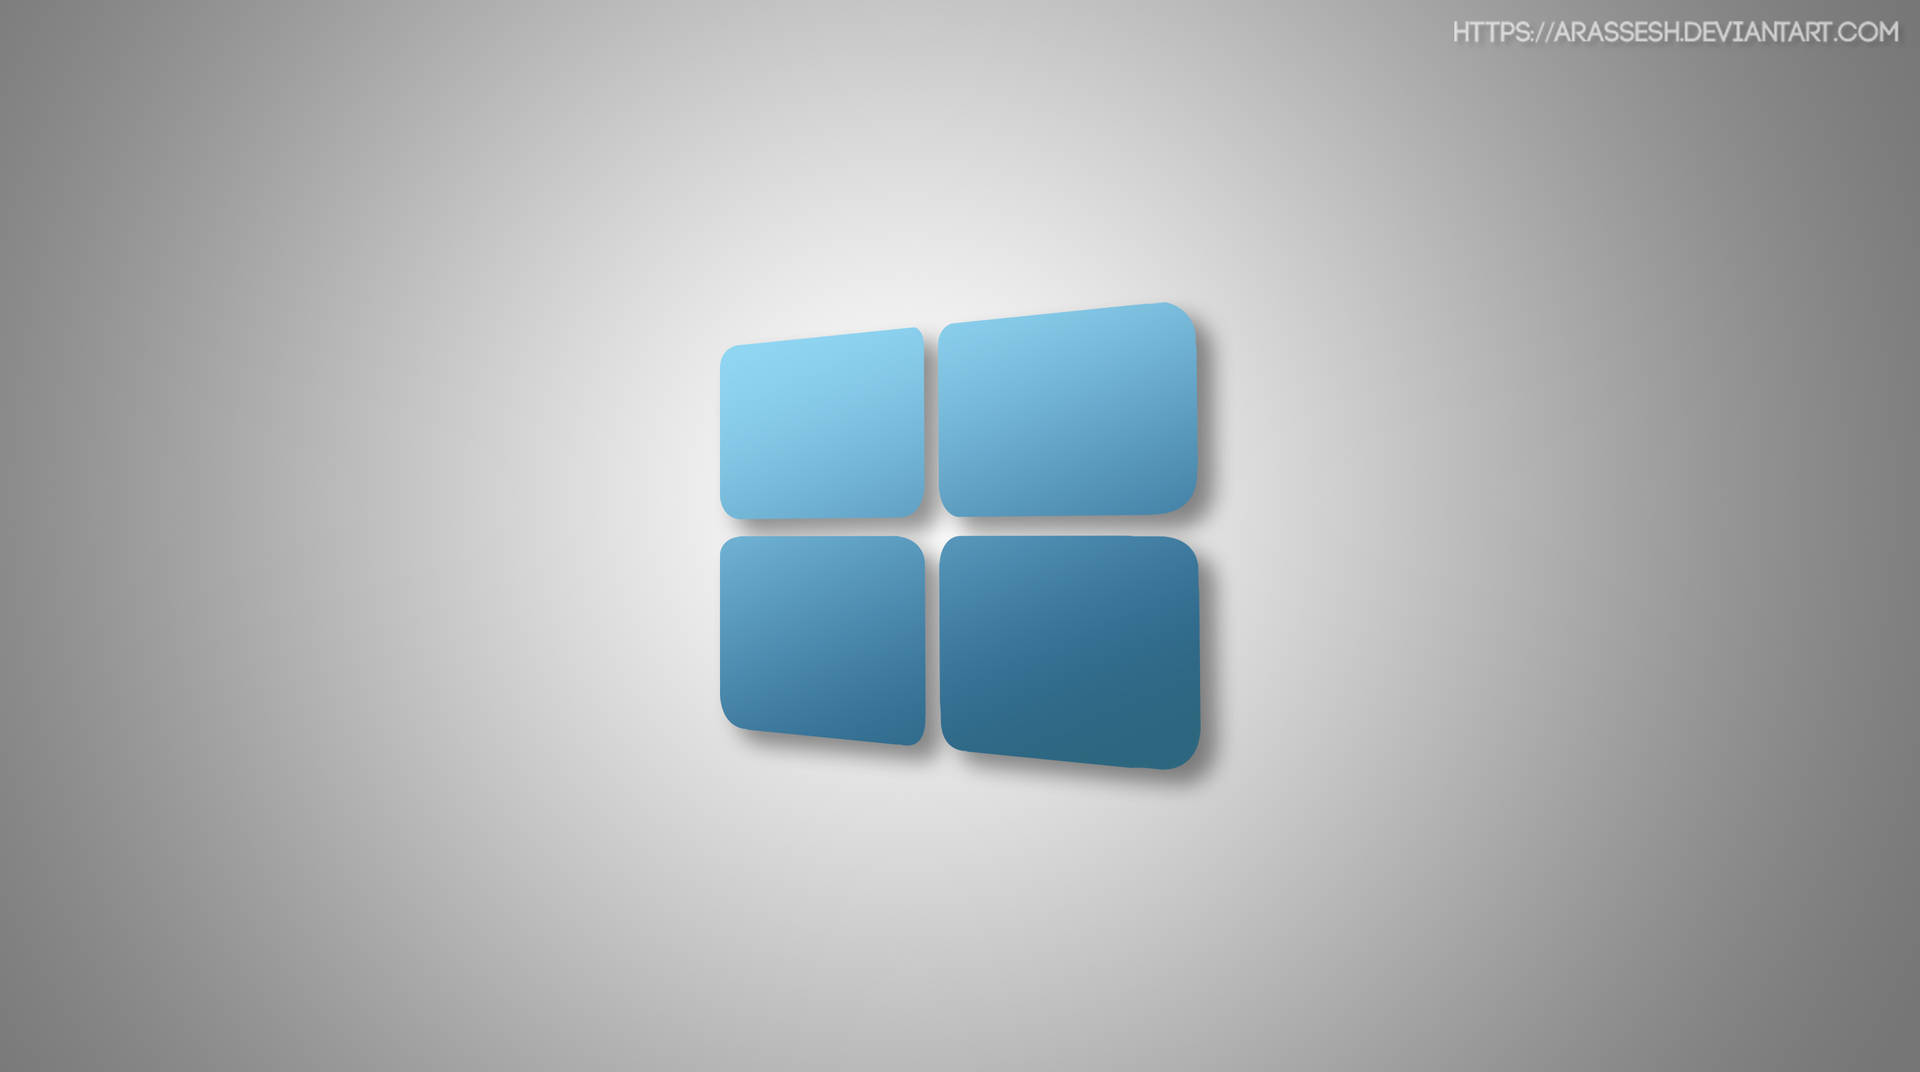 Minimalist Windows 10 Hd Blue Logo Background